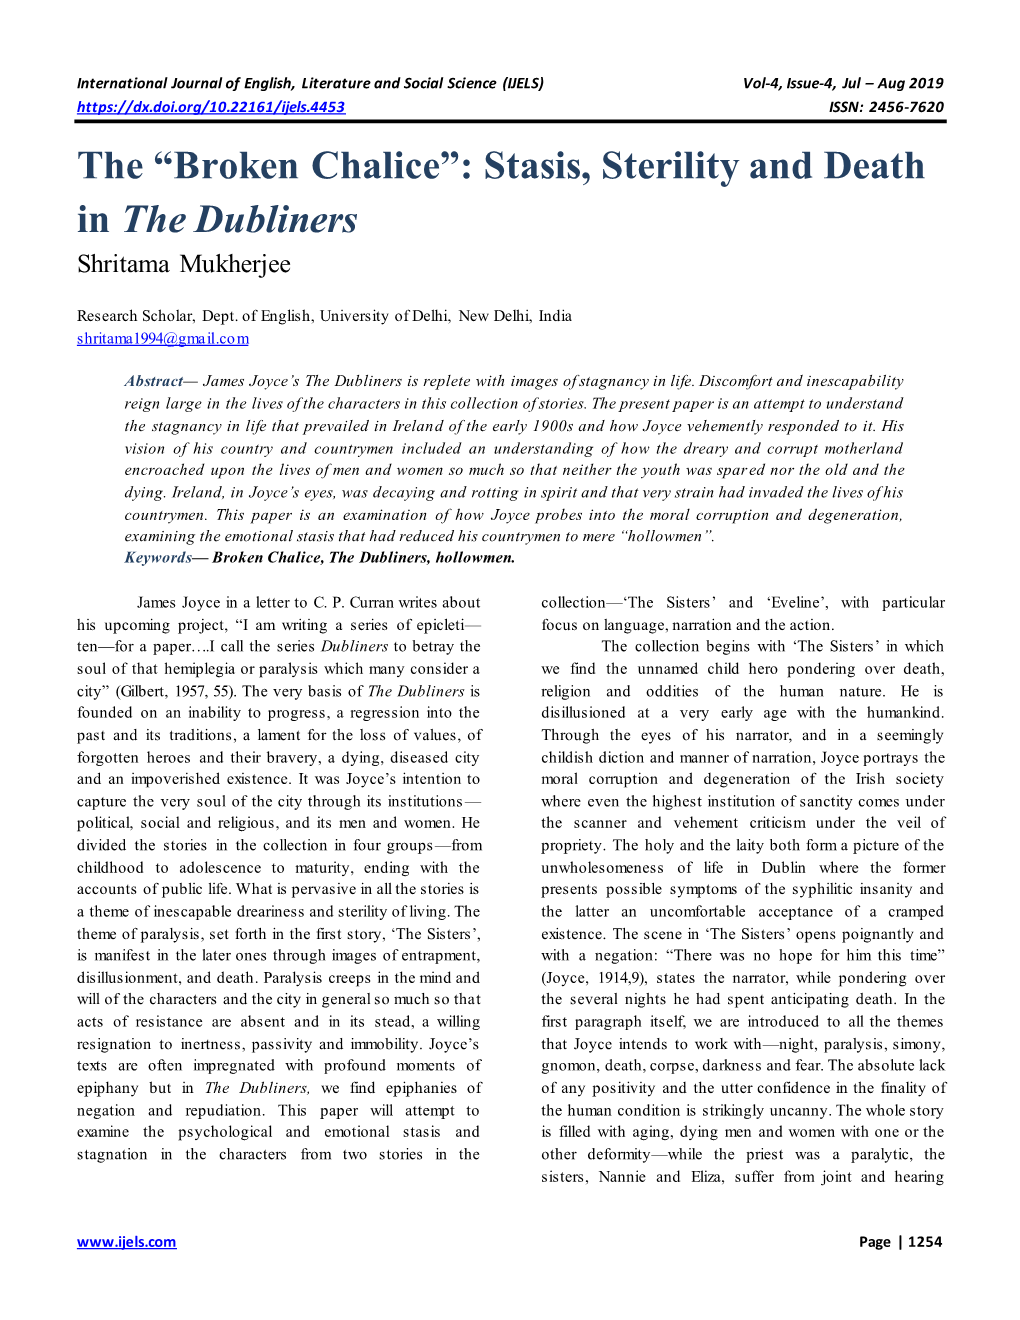 Broken Chalice”: Stasis, Sterility and Death in the Dubliners Shritama Mukherjee